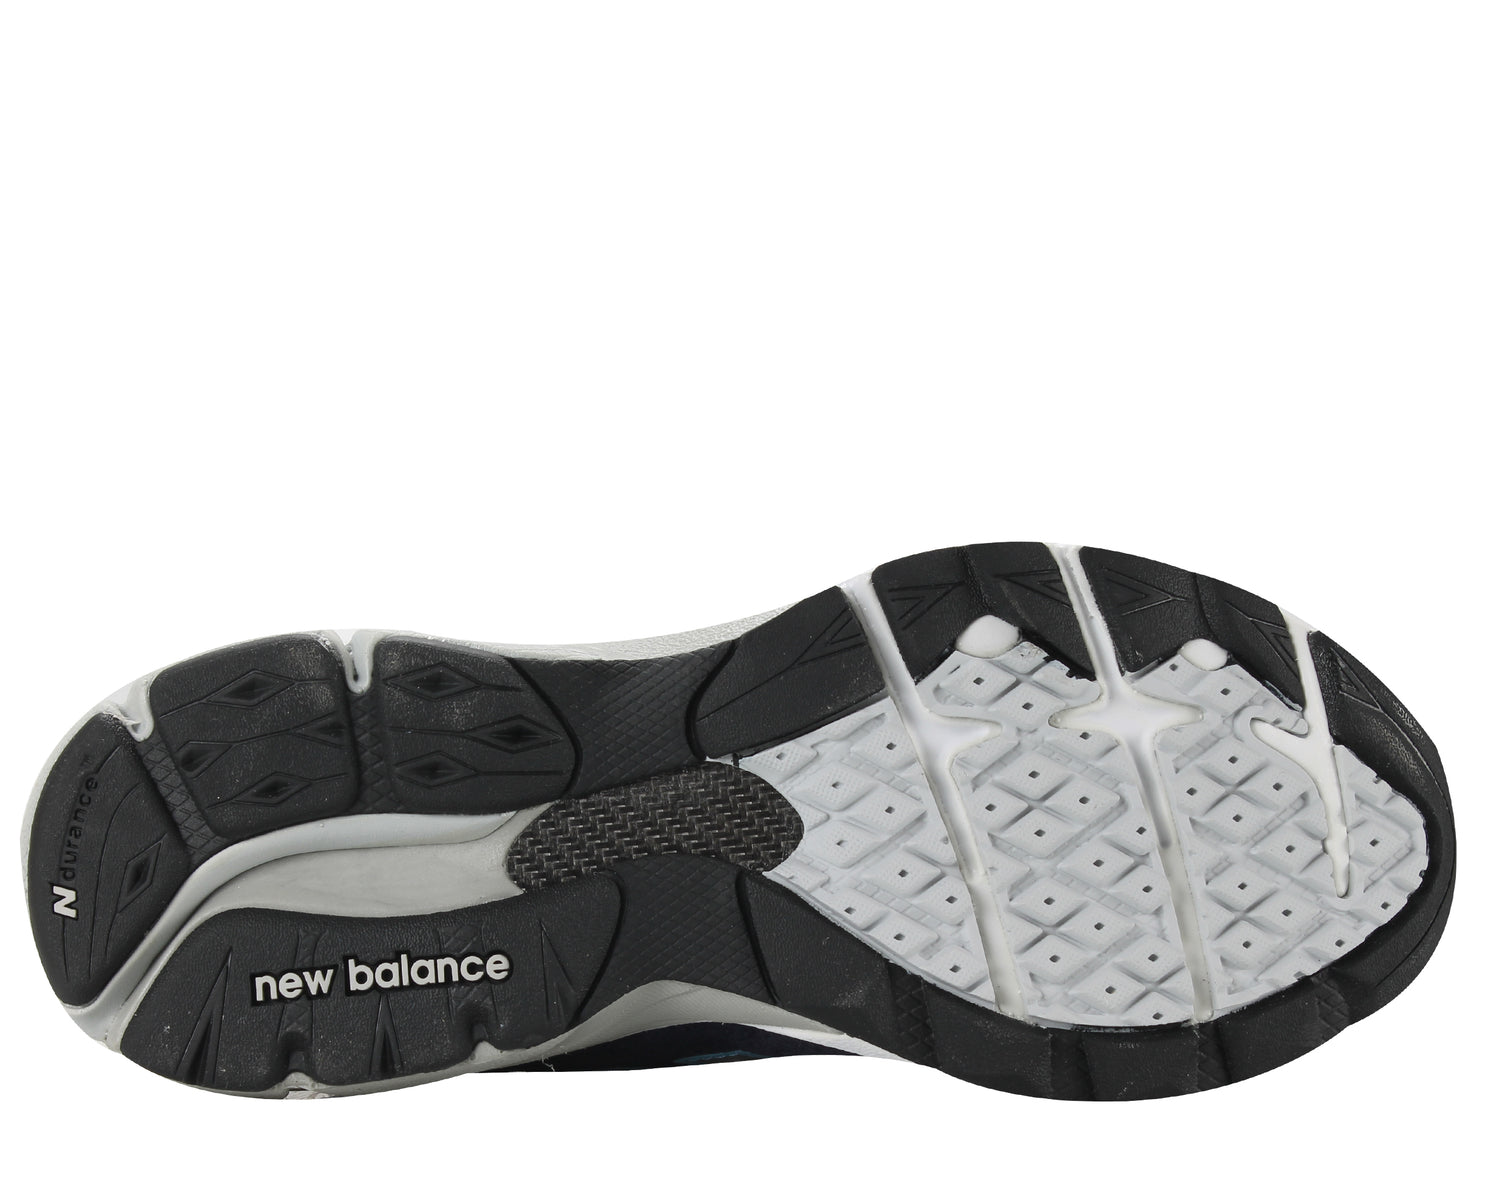 New Balance 990v3 Women's Running Shoes